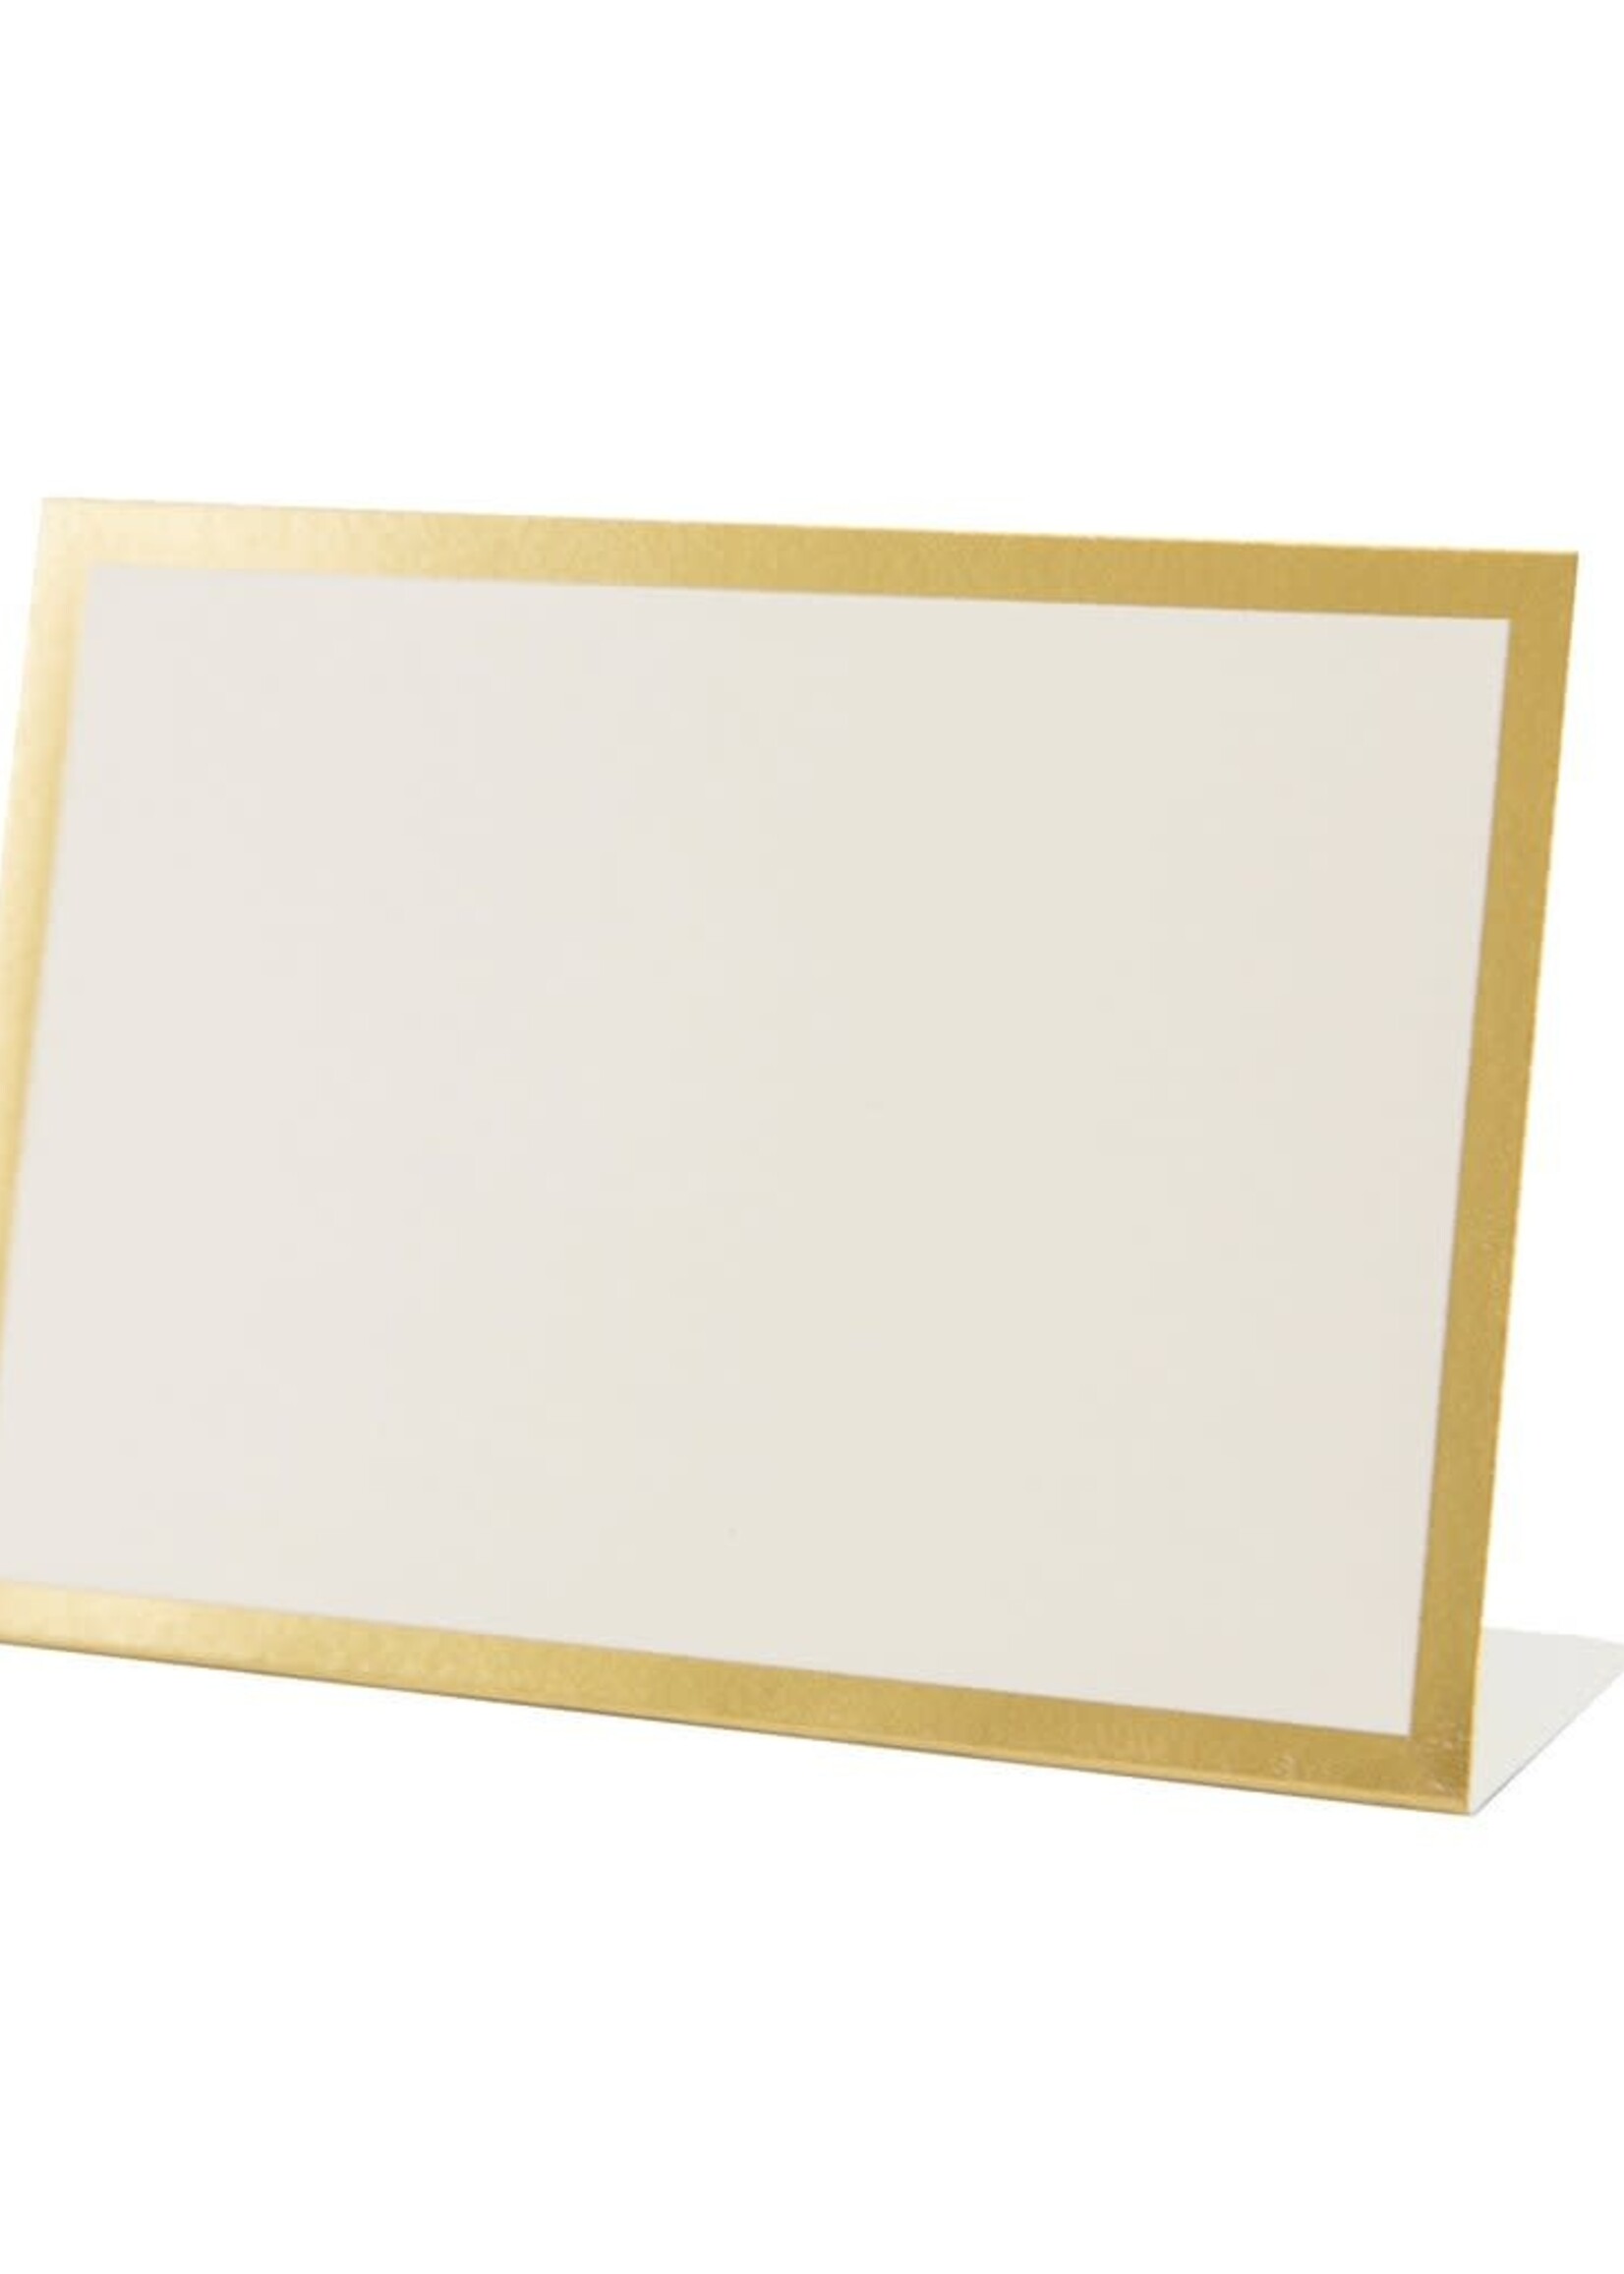 Hester & Cook Gold Frame Place Card - Pack of 12 - Bottom Fold